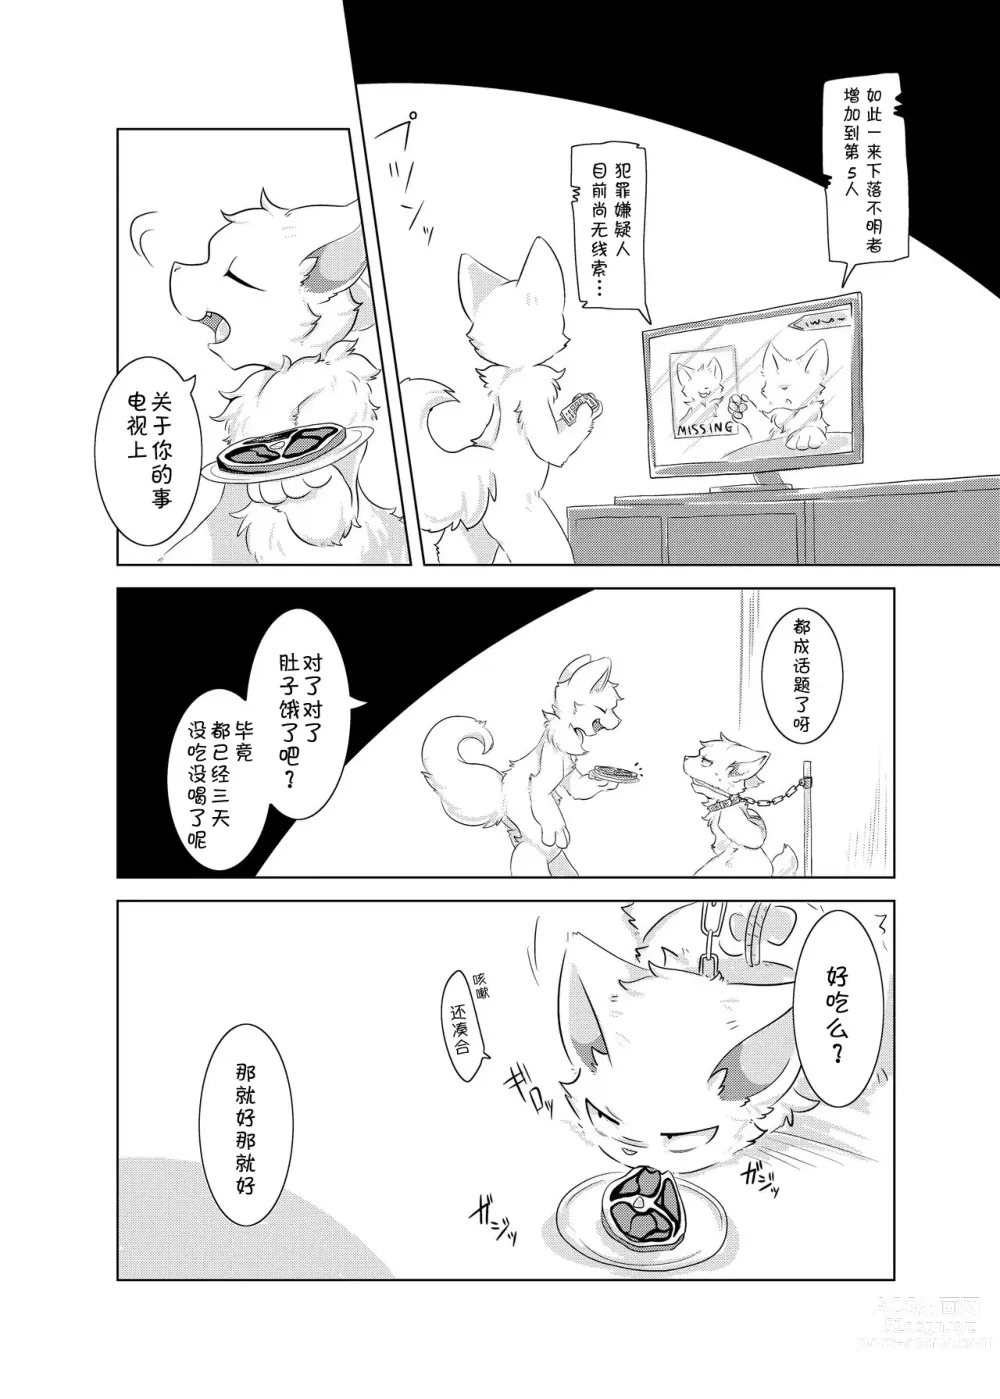 Page 4 of doujinshi 啊啊，亲爱的不死猫